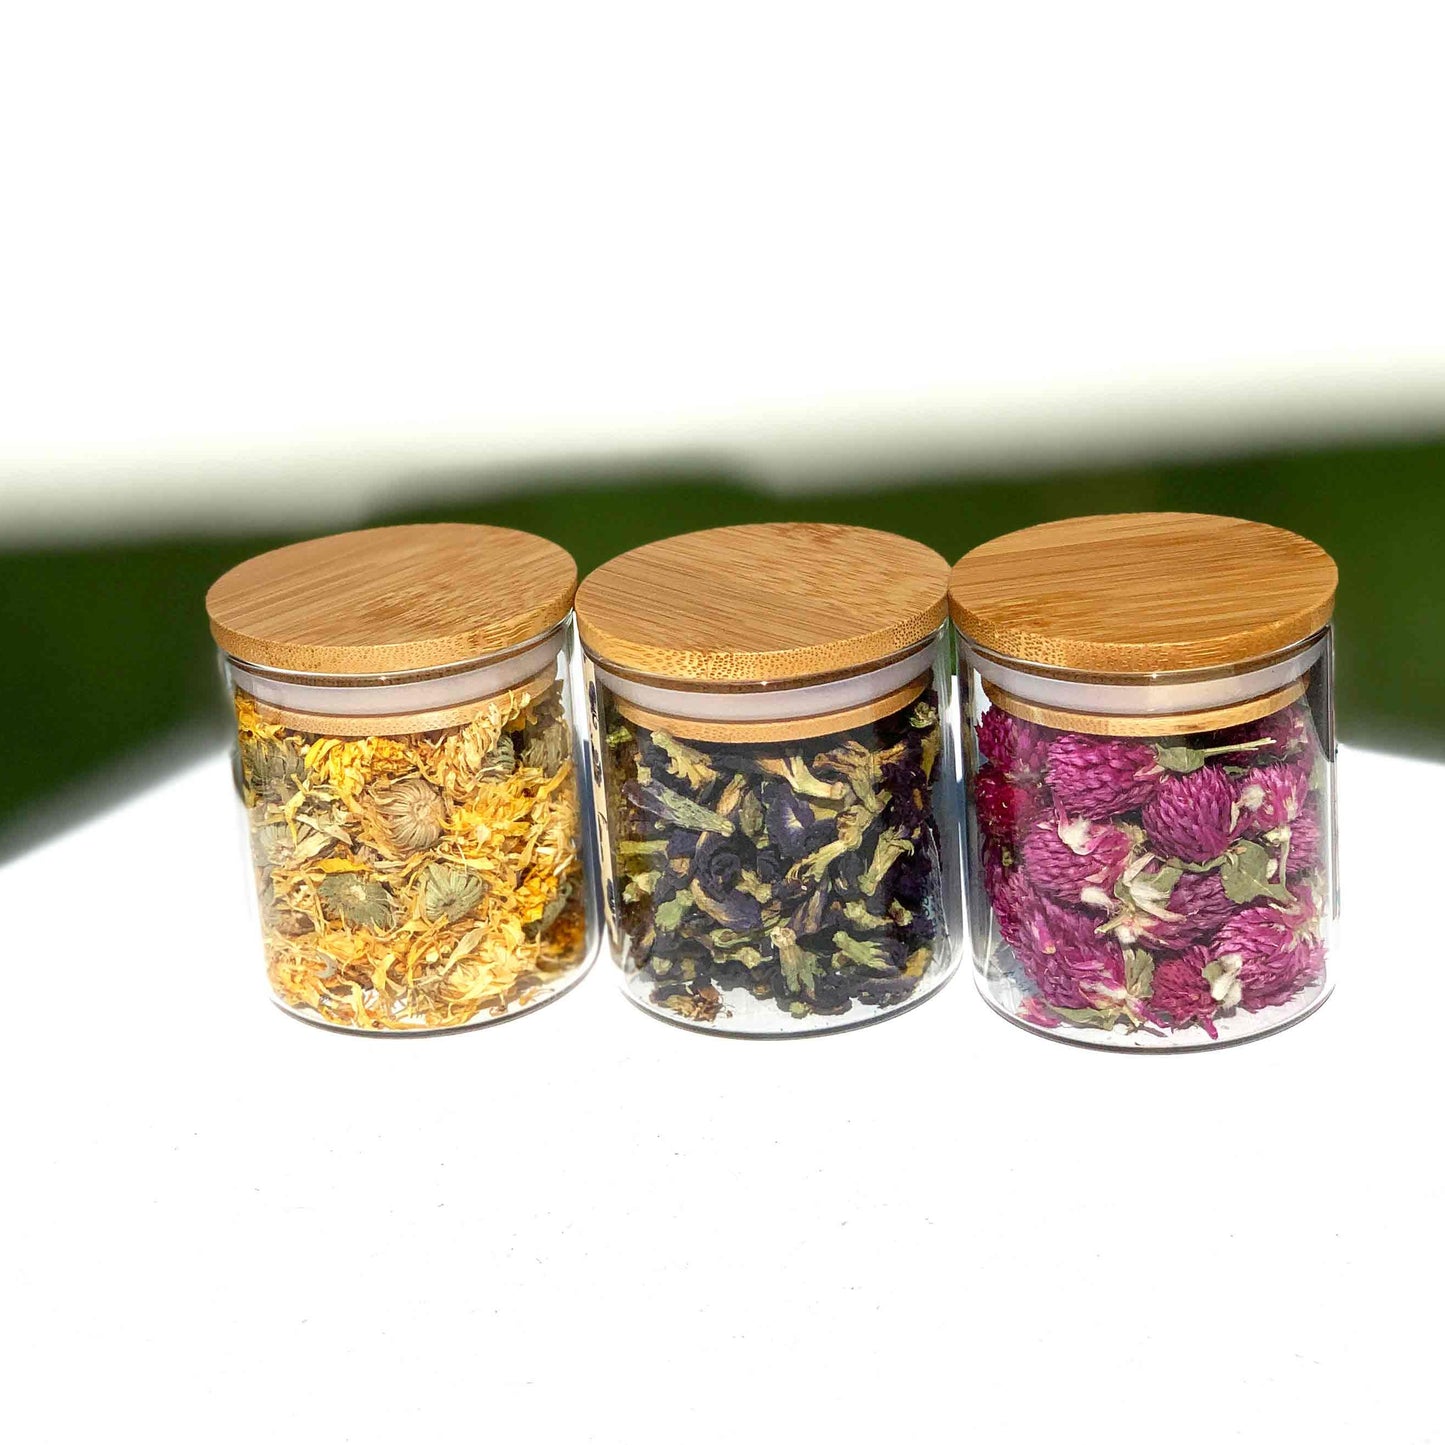 Assorted Organic Floral Teas